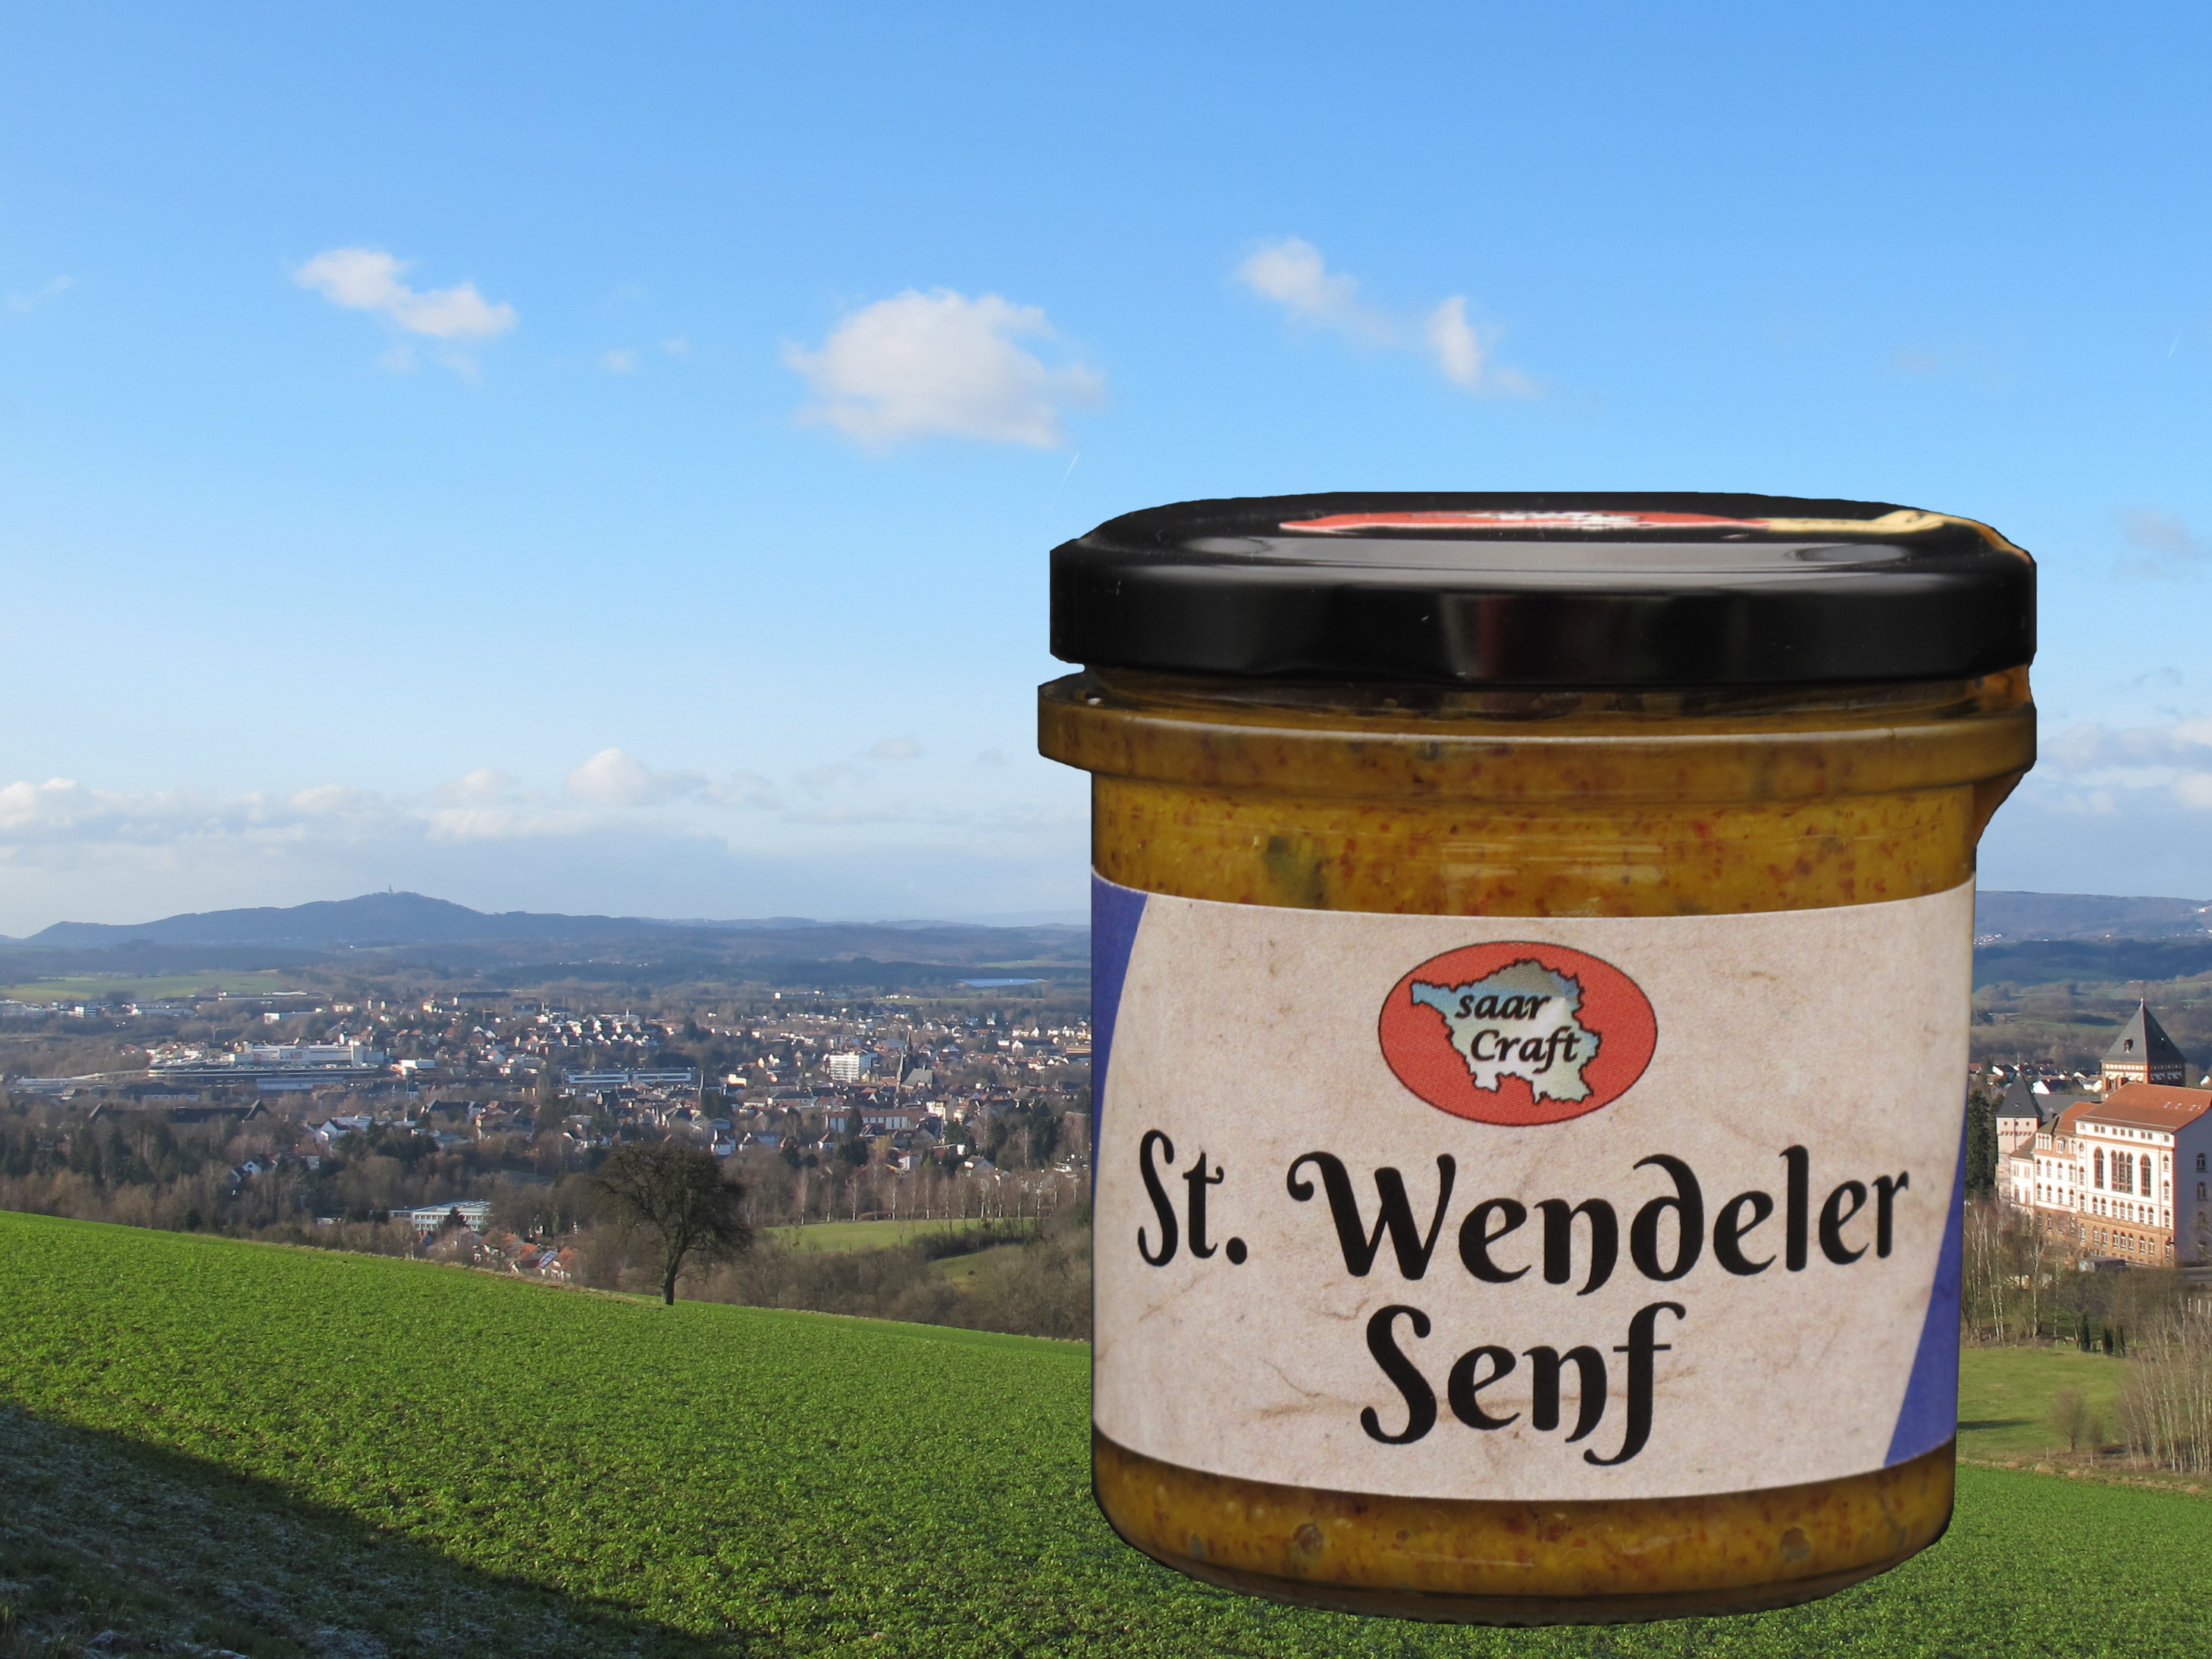 St. Wendeler Senf